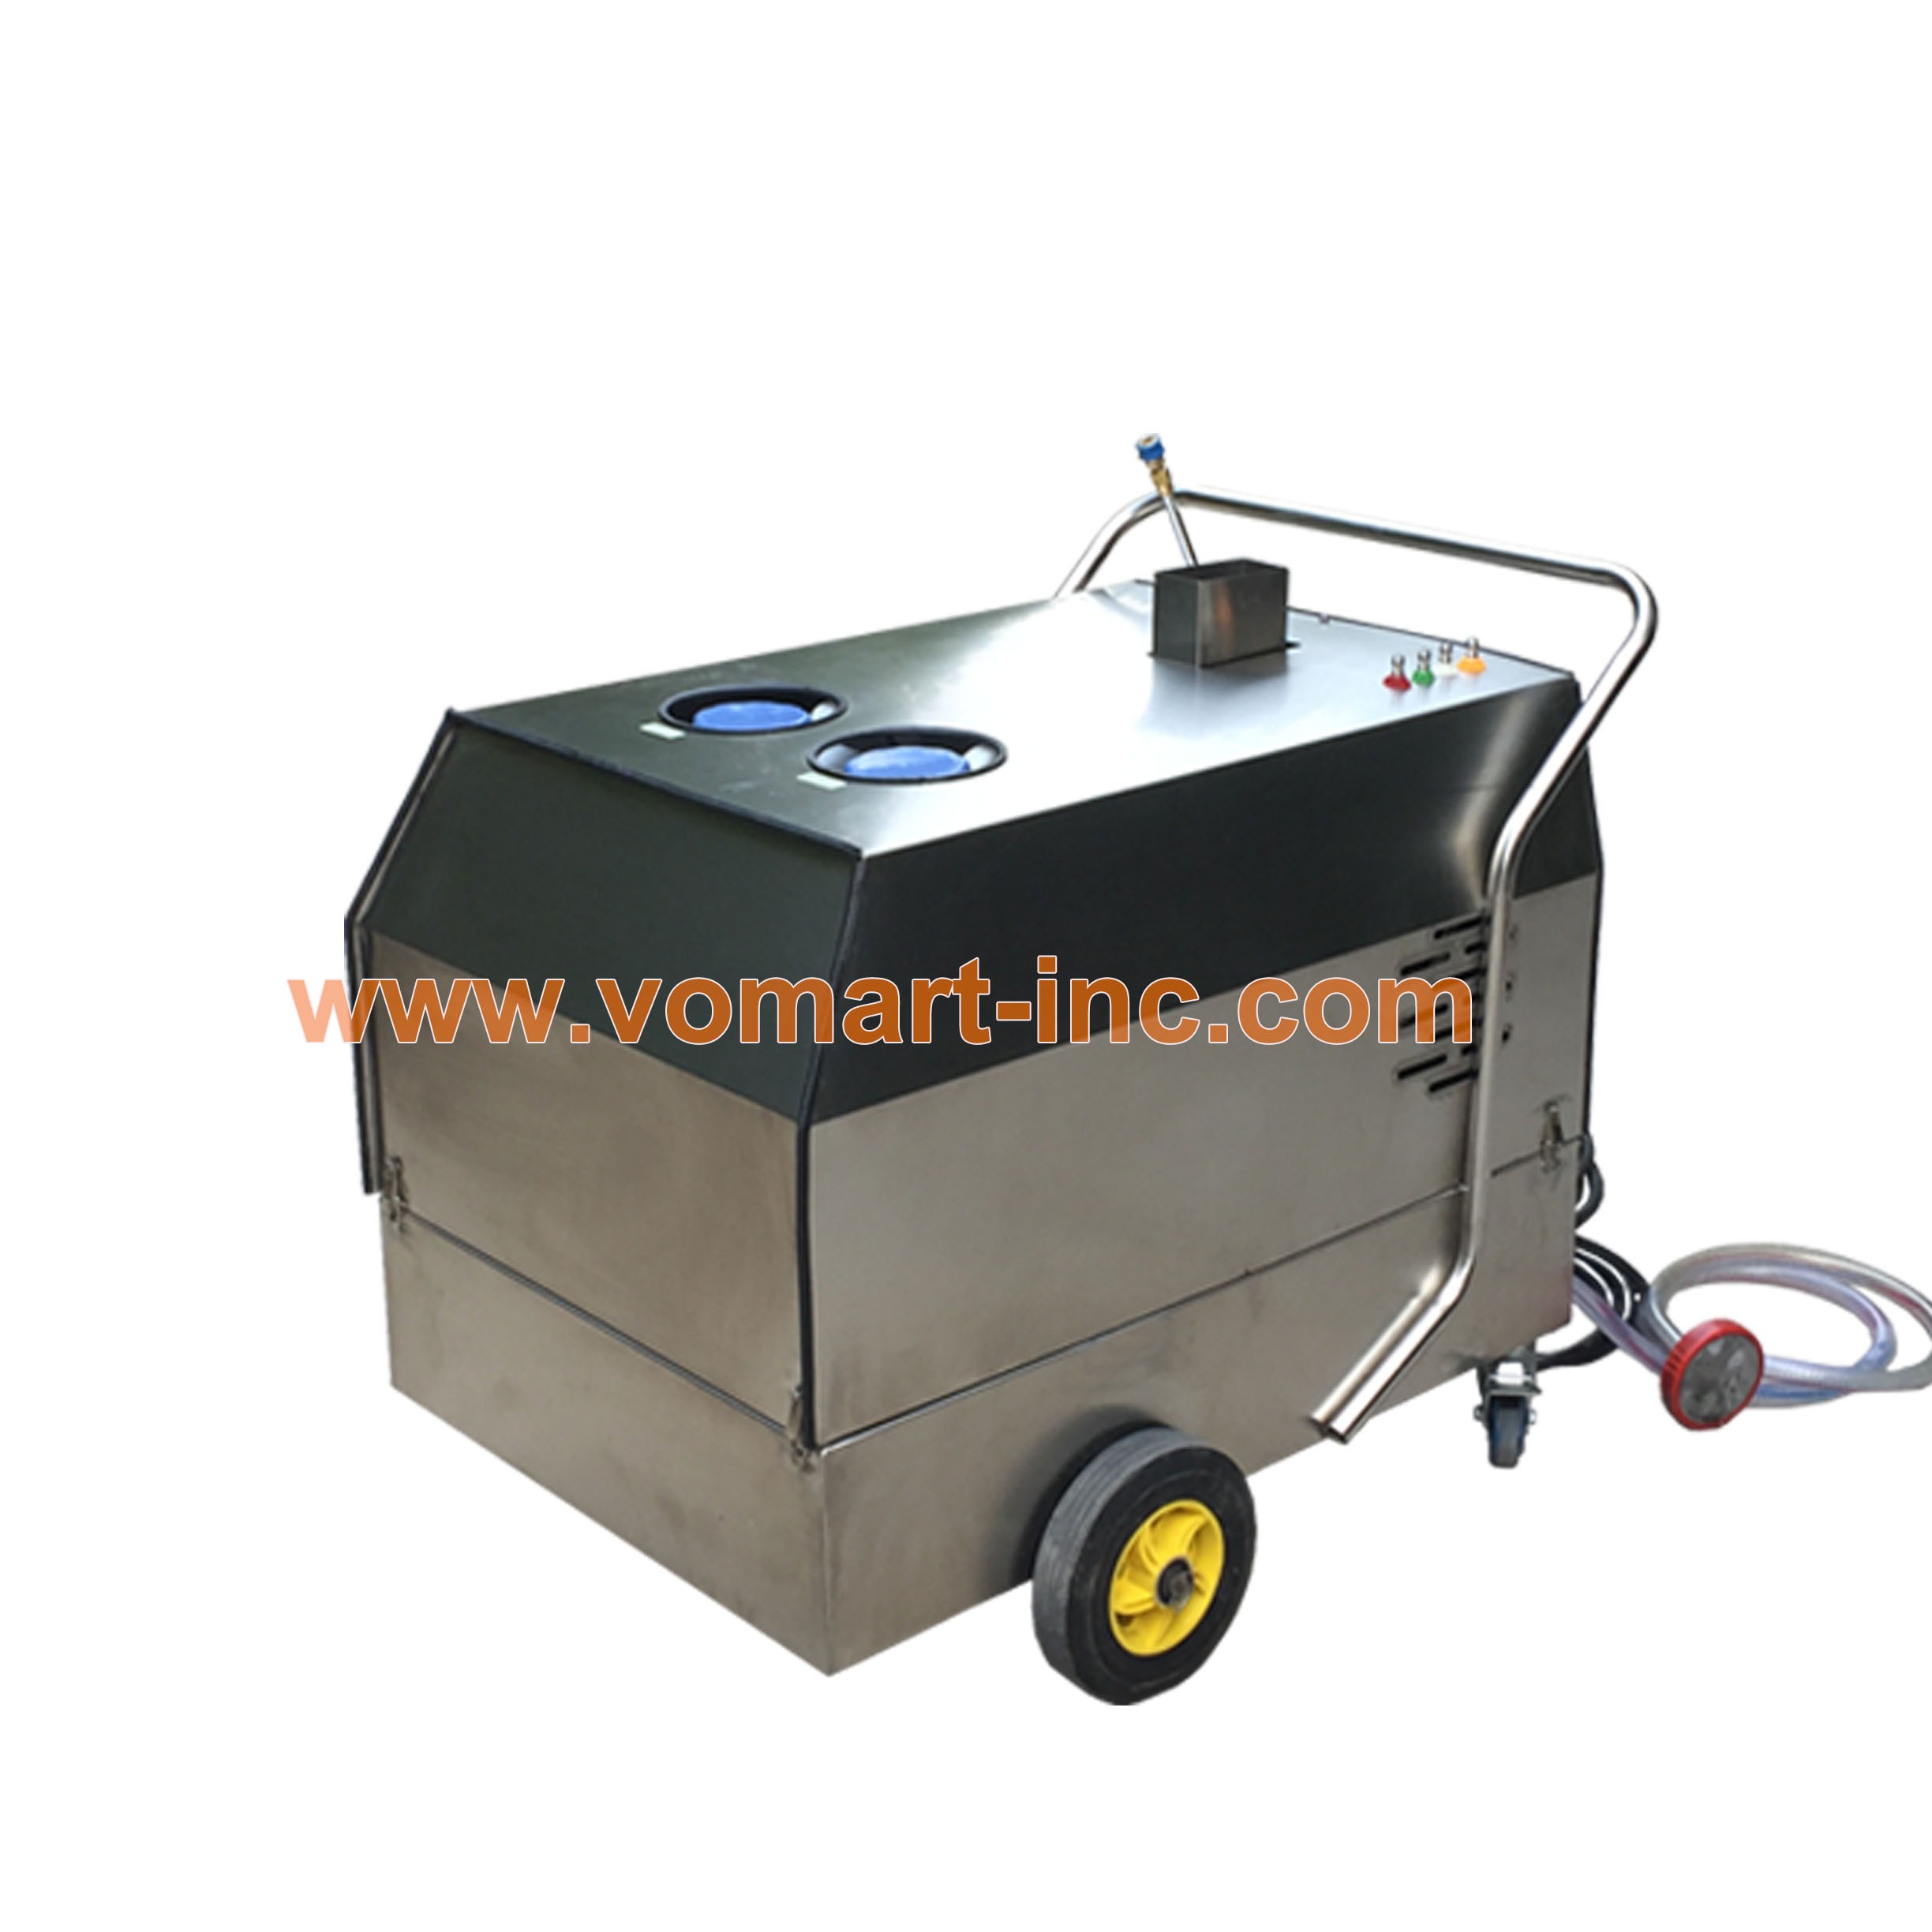 Automatic Car Wash Machine - Vomart-Mobile steam car wash machine ,  hot/cold water high pressure wash machine ,automatic car wash machine,car  lift and other equipment.